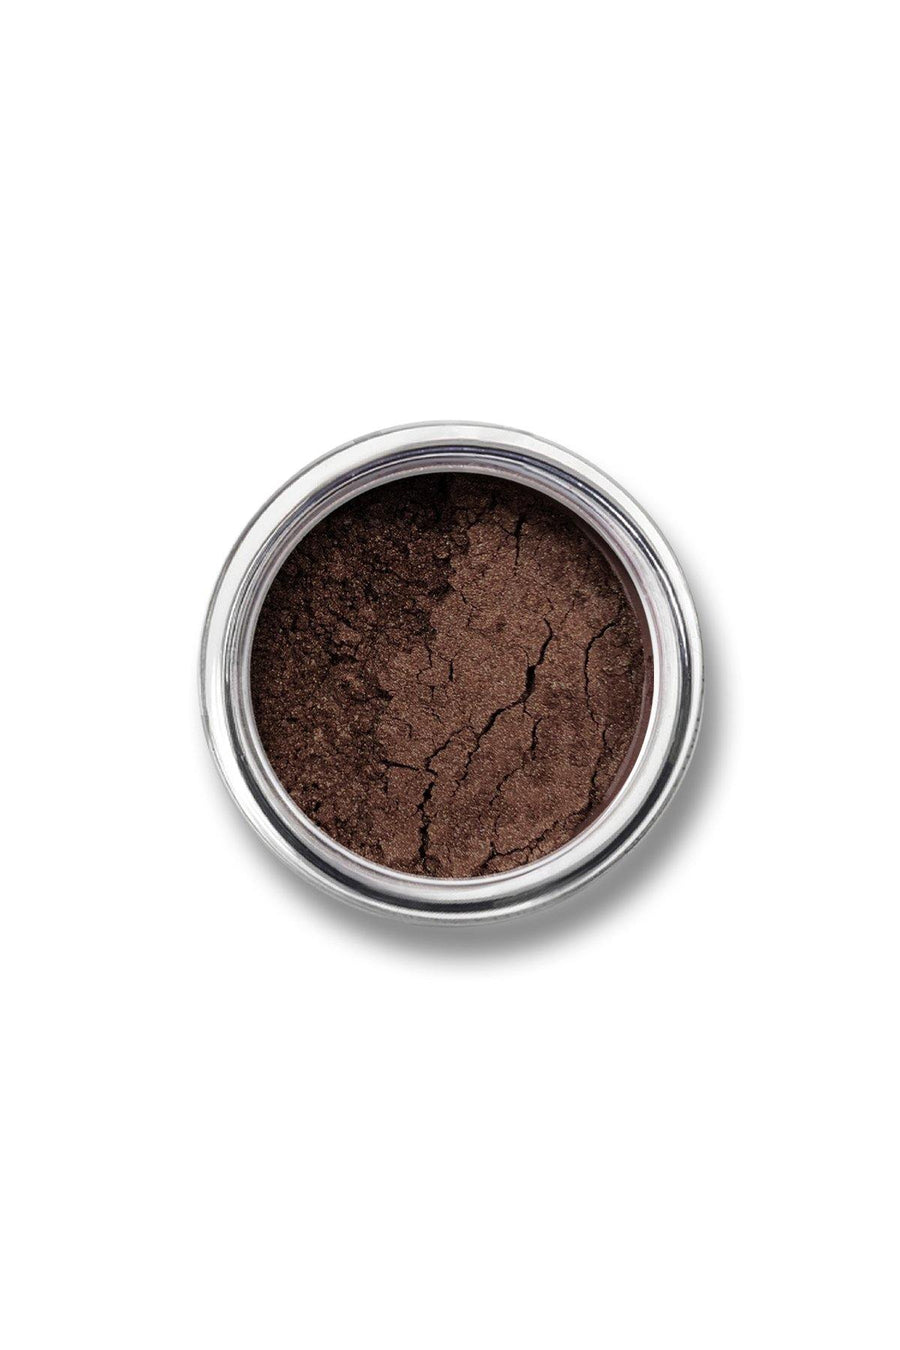 Matte Eyeshadow #66 - Mocha - Blend Mineral Cosmetics